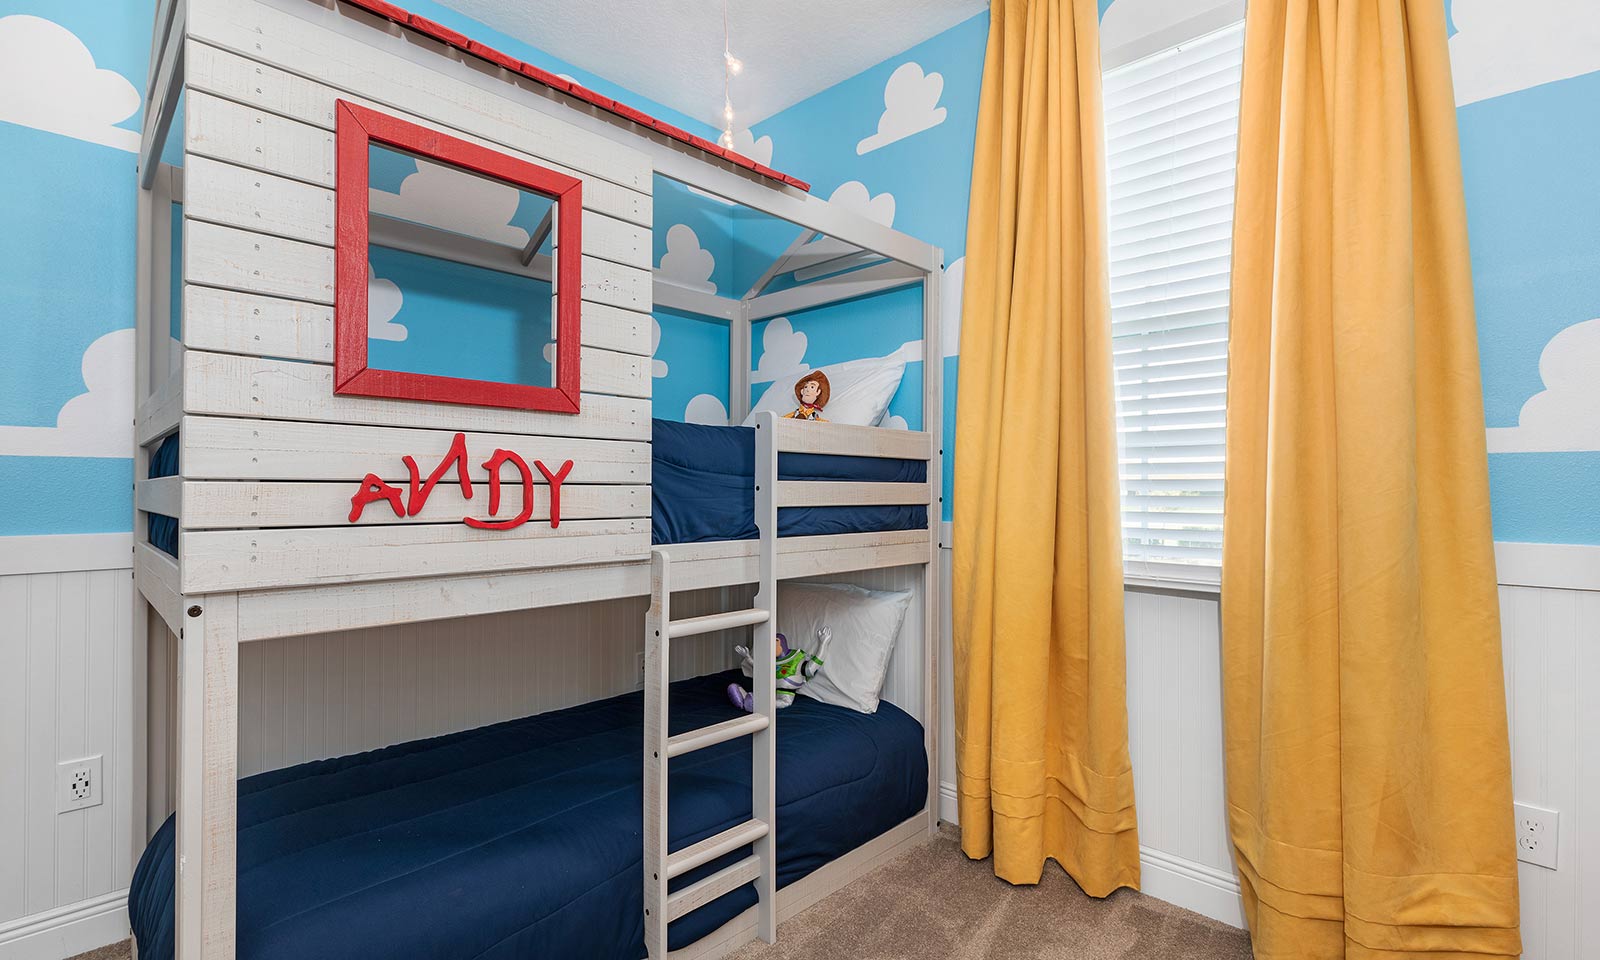 [amenities:themed-bedroom:1] Themed Bedroom